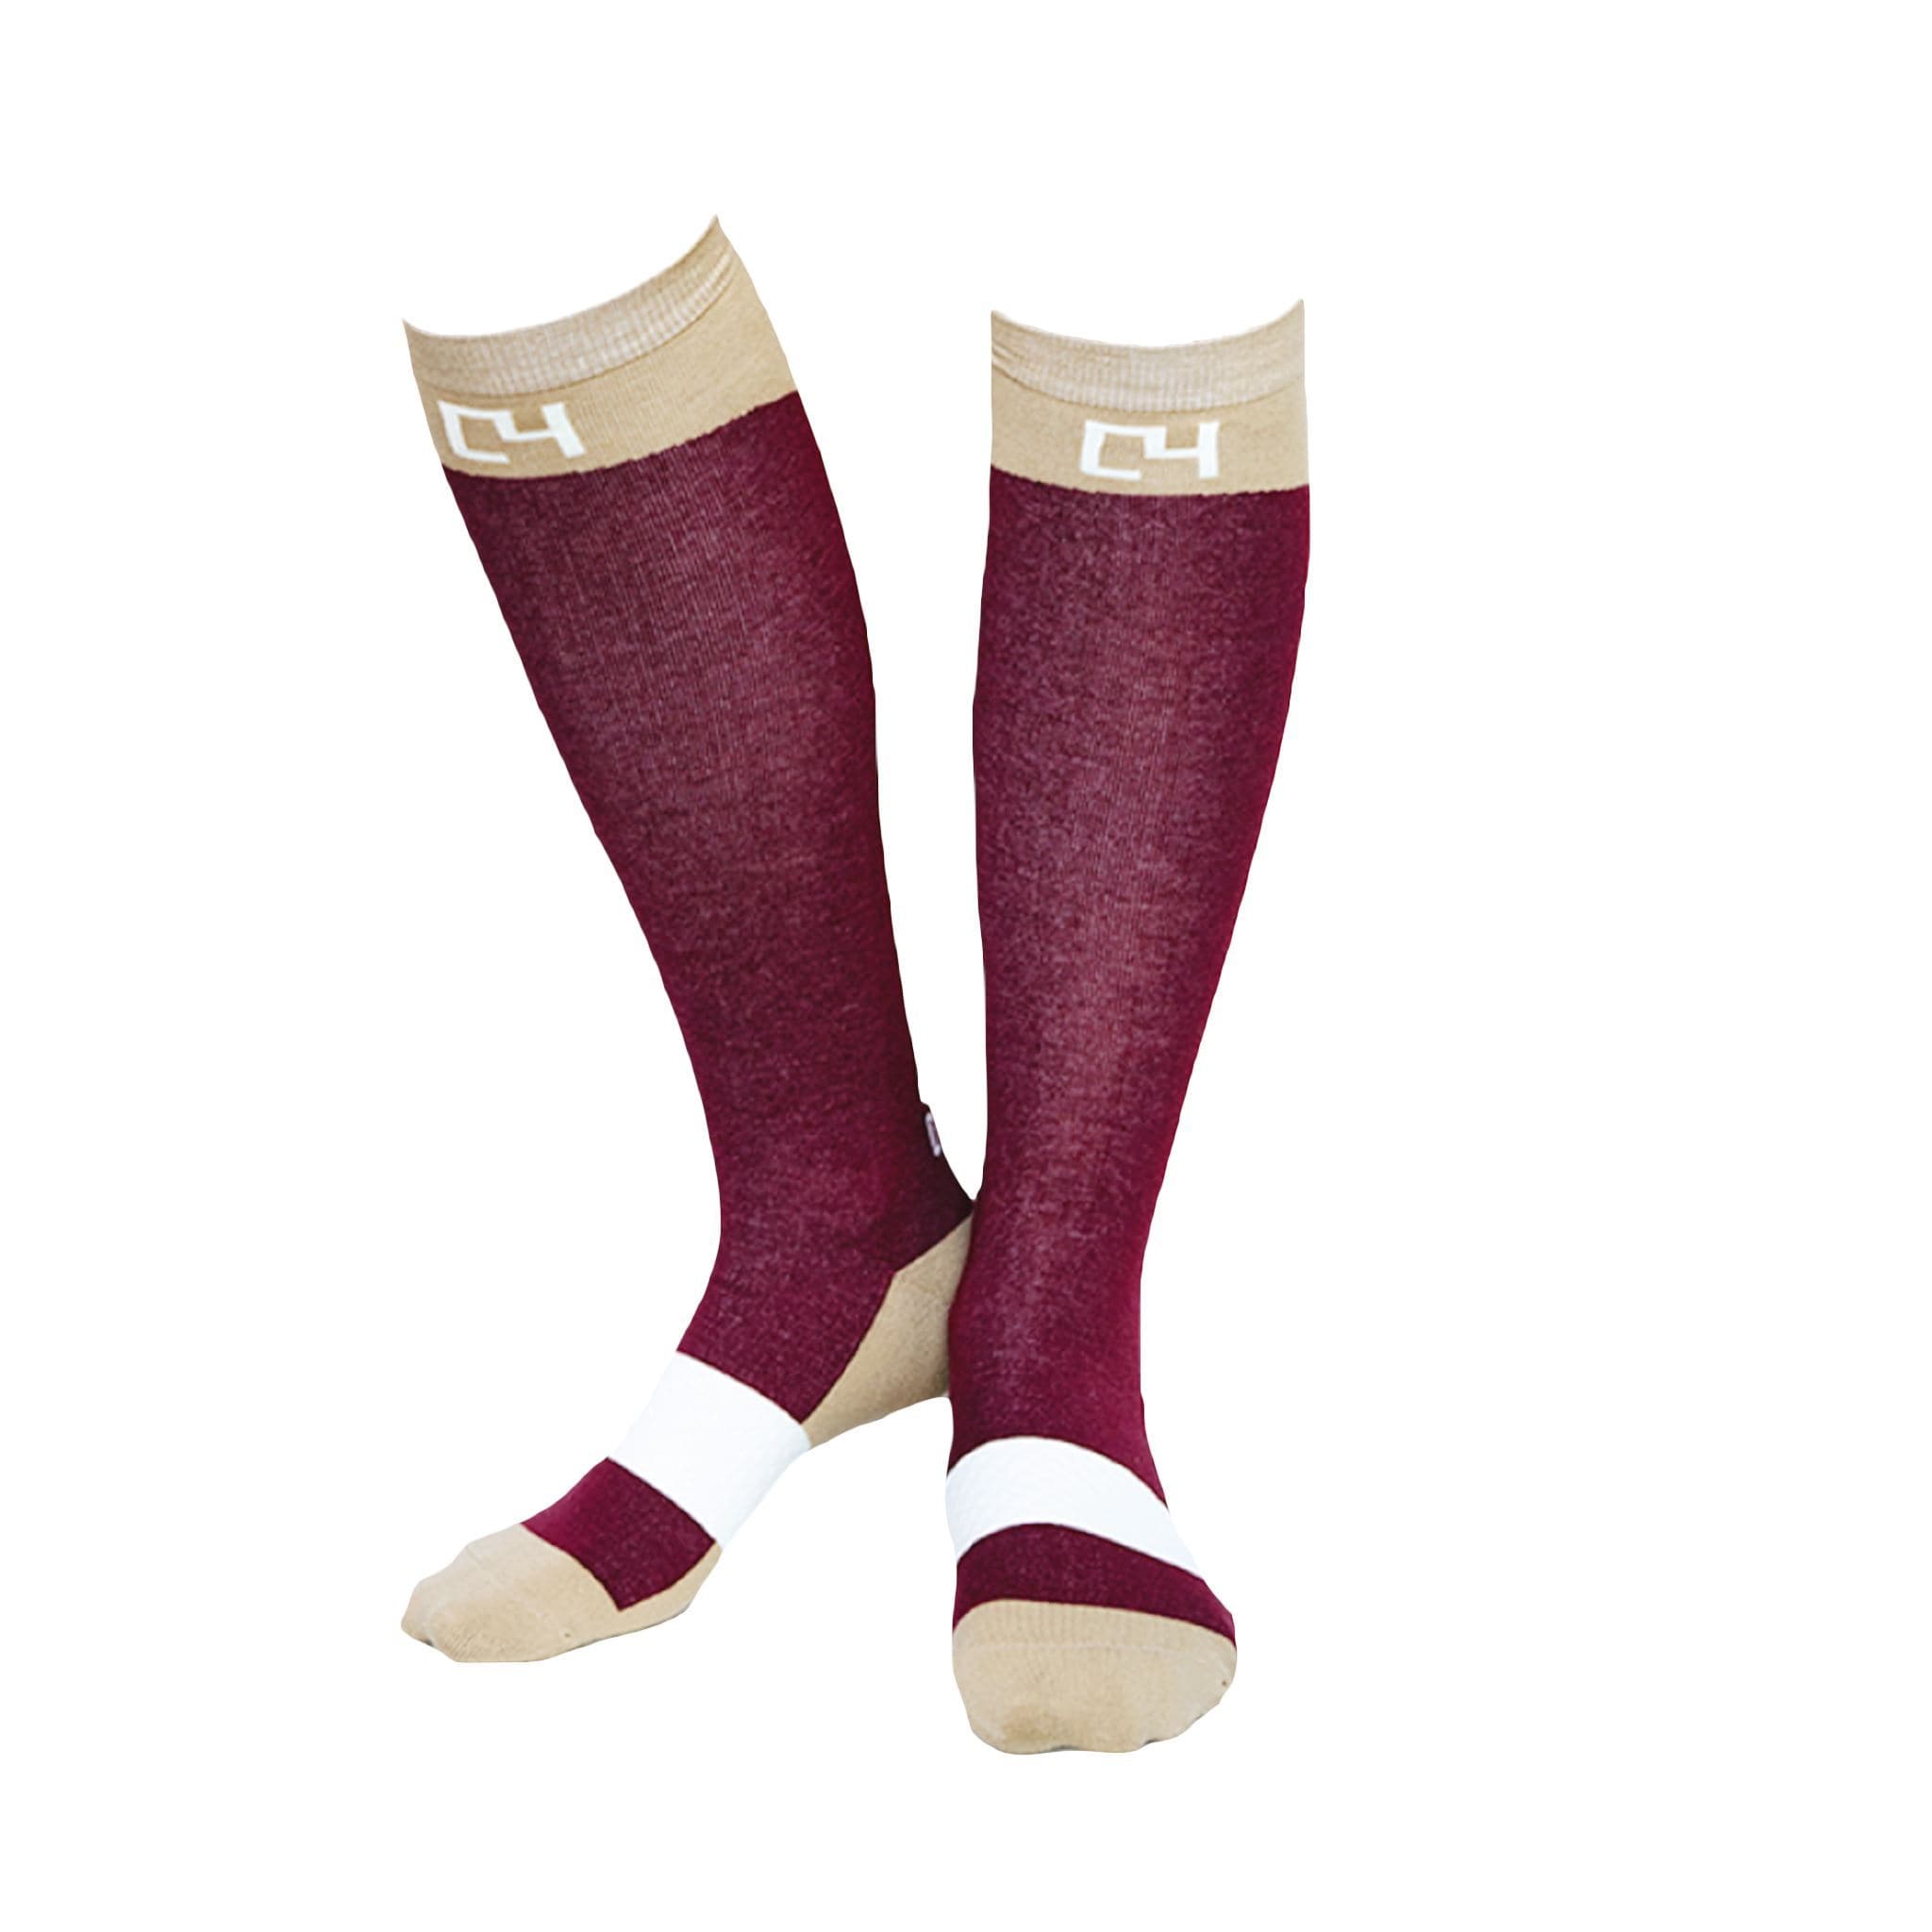 High Performance Riding Socks - Maroon & Cream socks mistylaurel BELTS